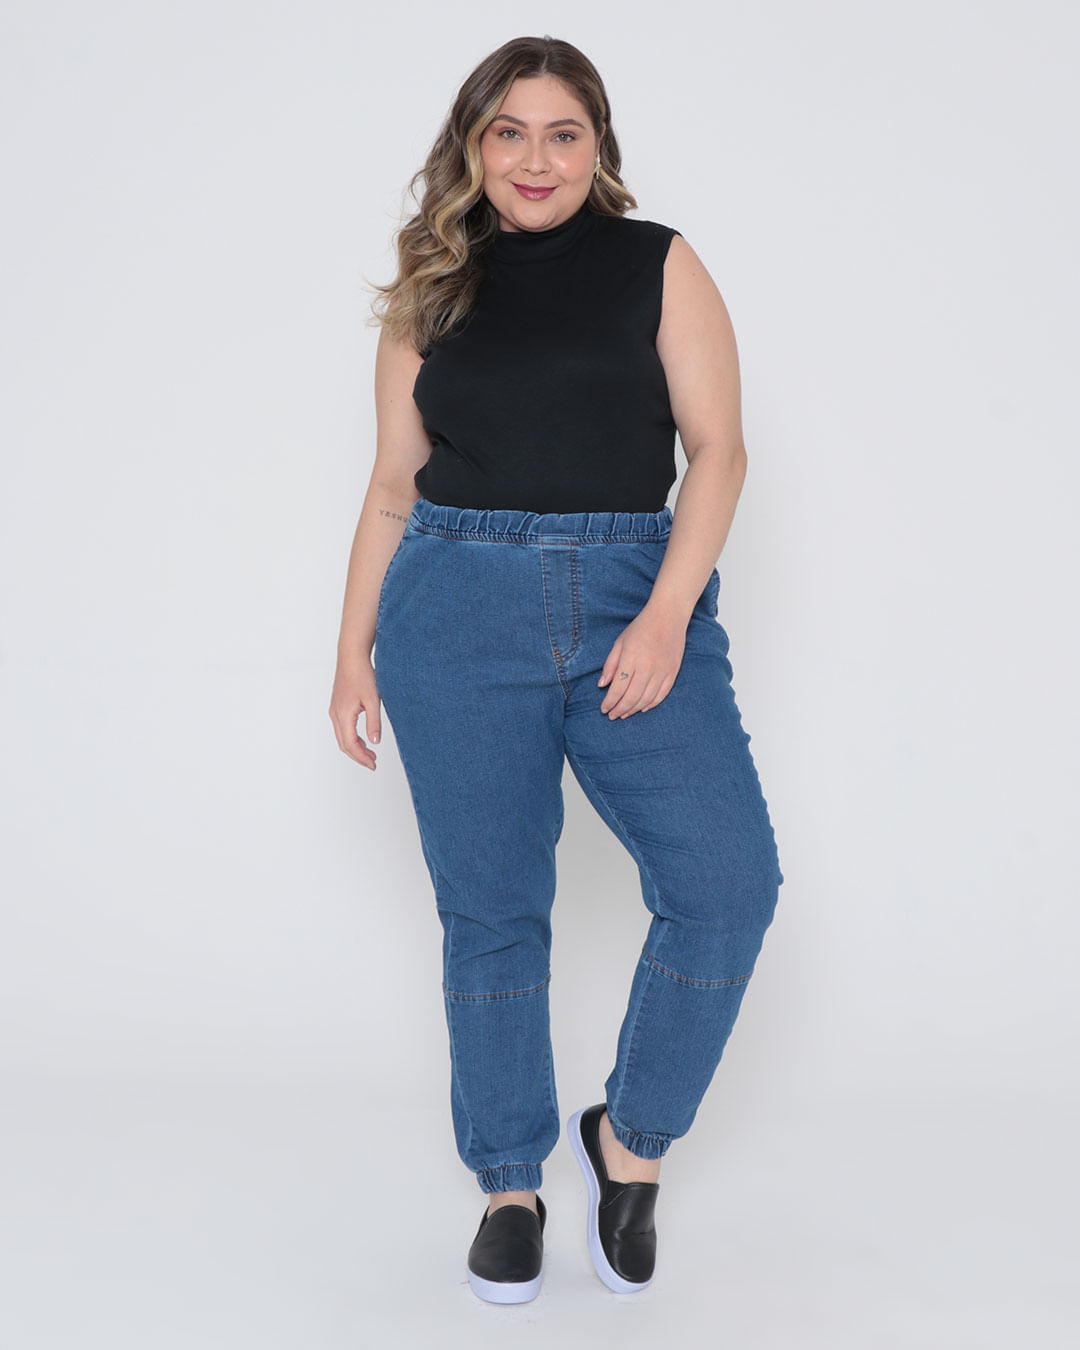 Calca-Jeans-Feminina-Plus-Size-Jogger-Azul